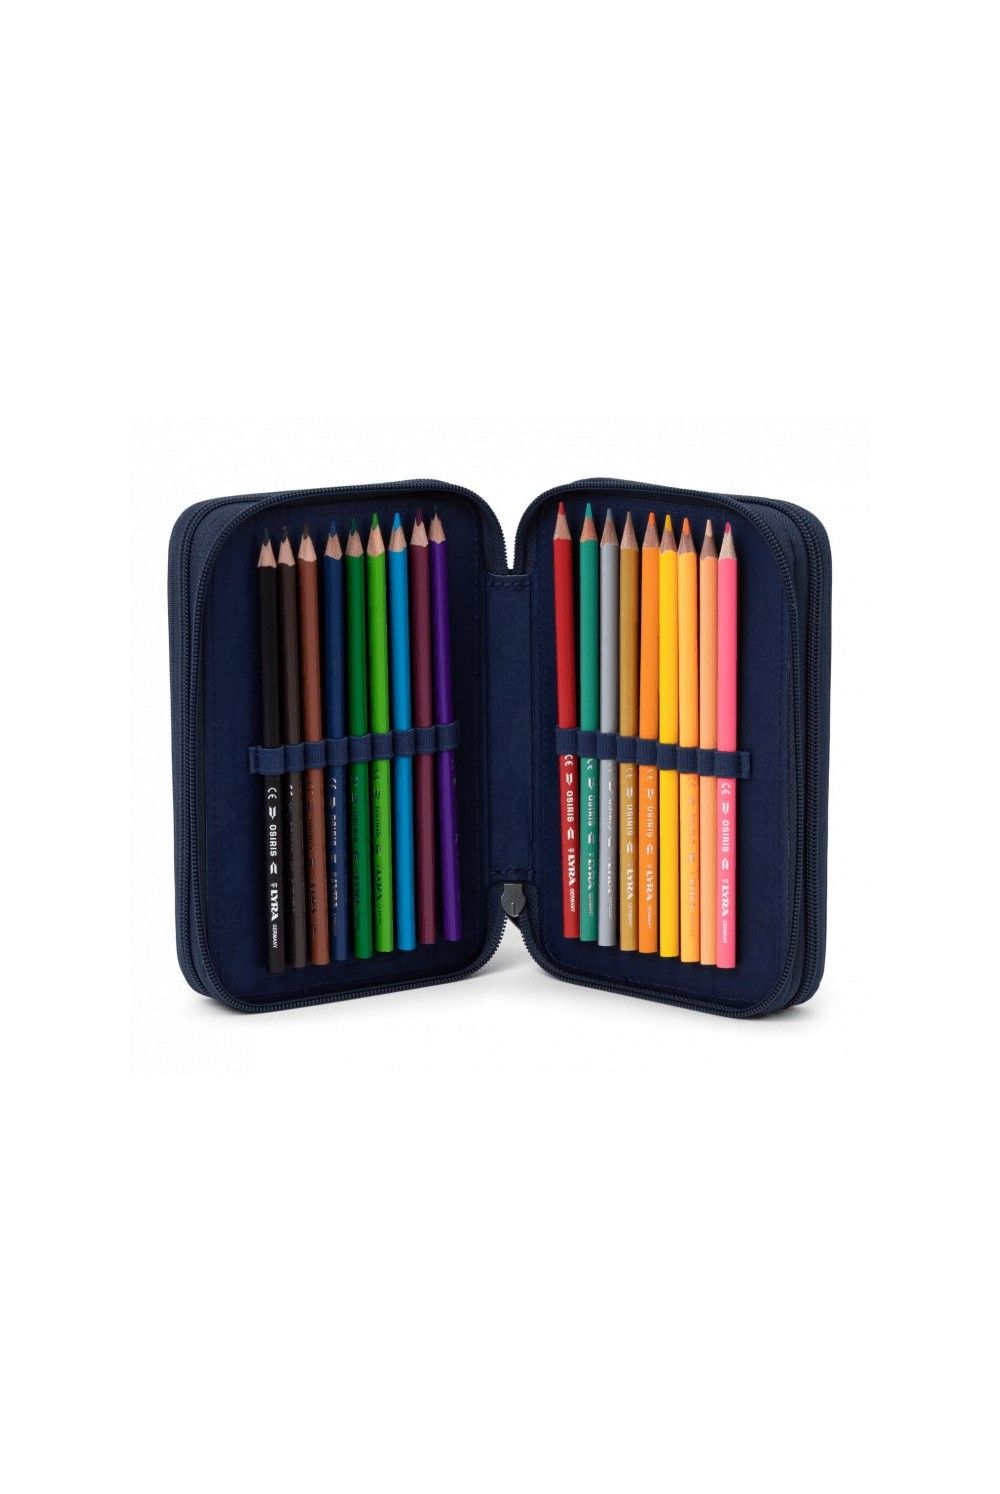 Ergobag maxi pencil case ZauBärwelt